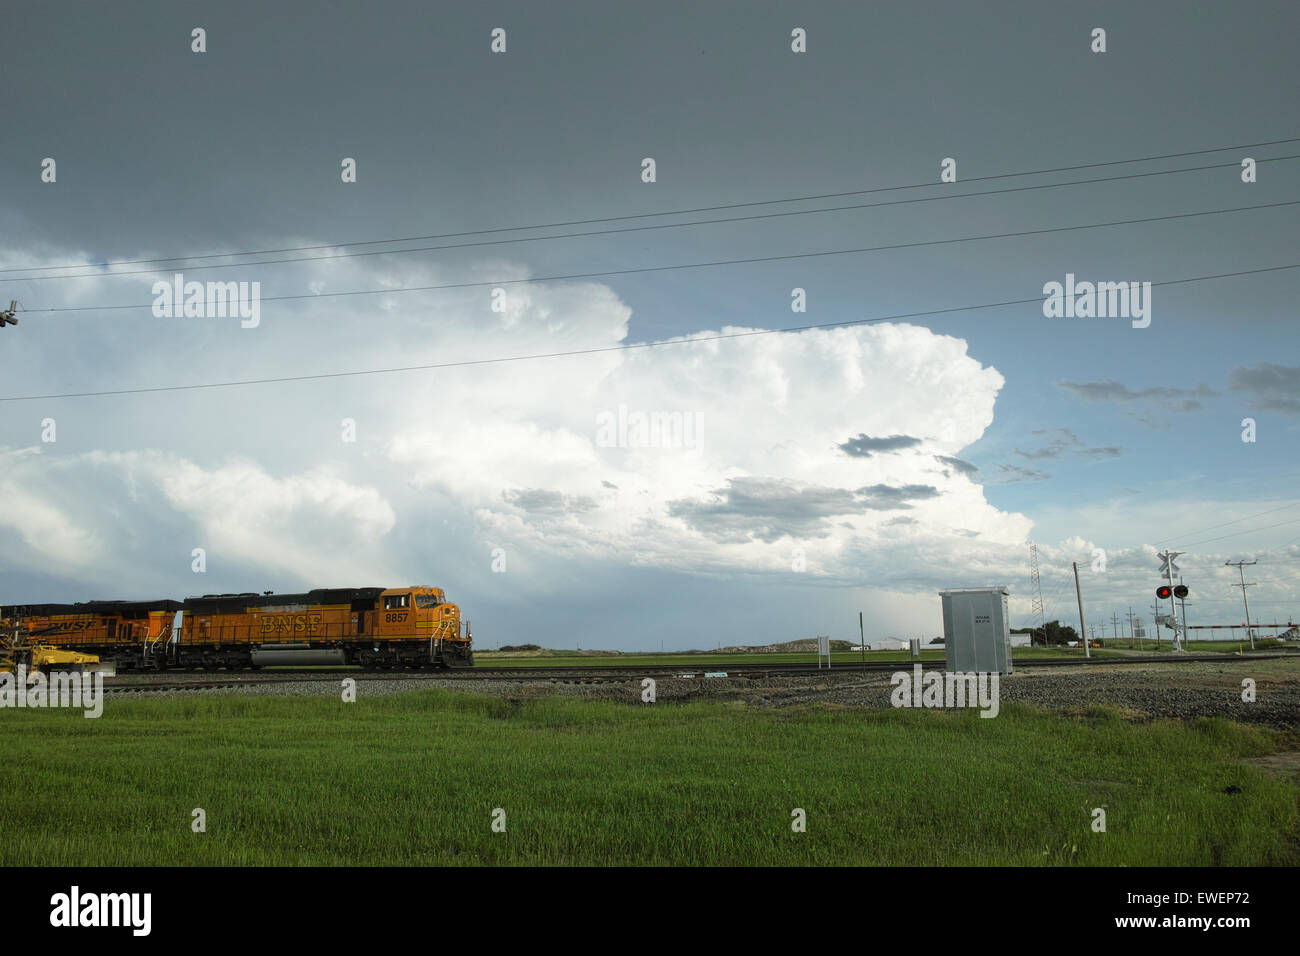 bnsf burlington northern santa fe train going into storm Stock Photo